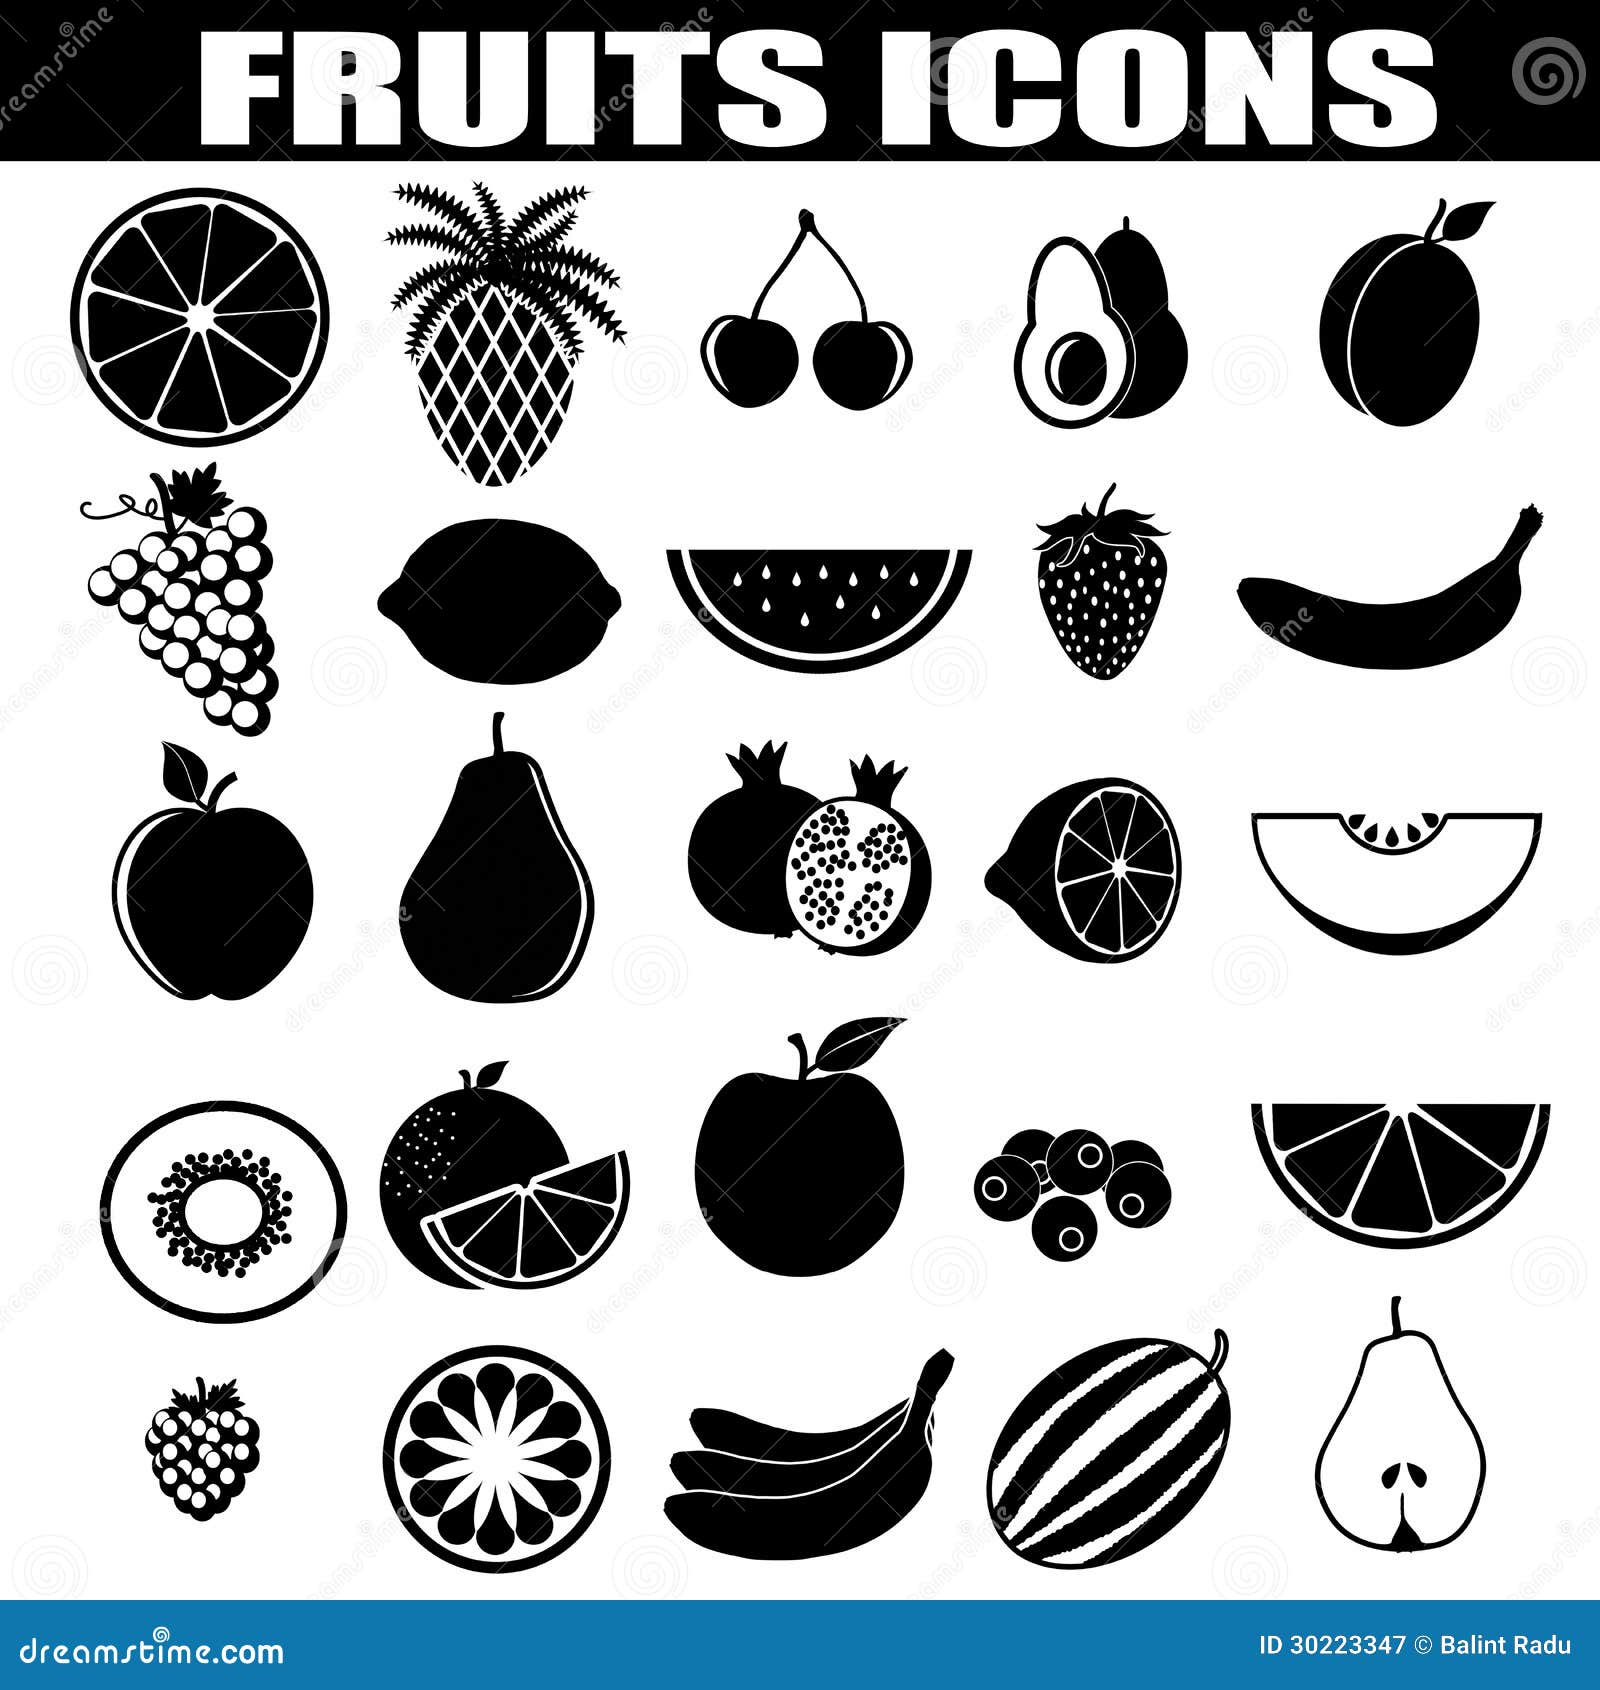 Fruits icons set stock vector. Illustration of food, leaf - 30223347